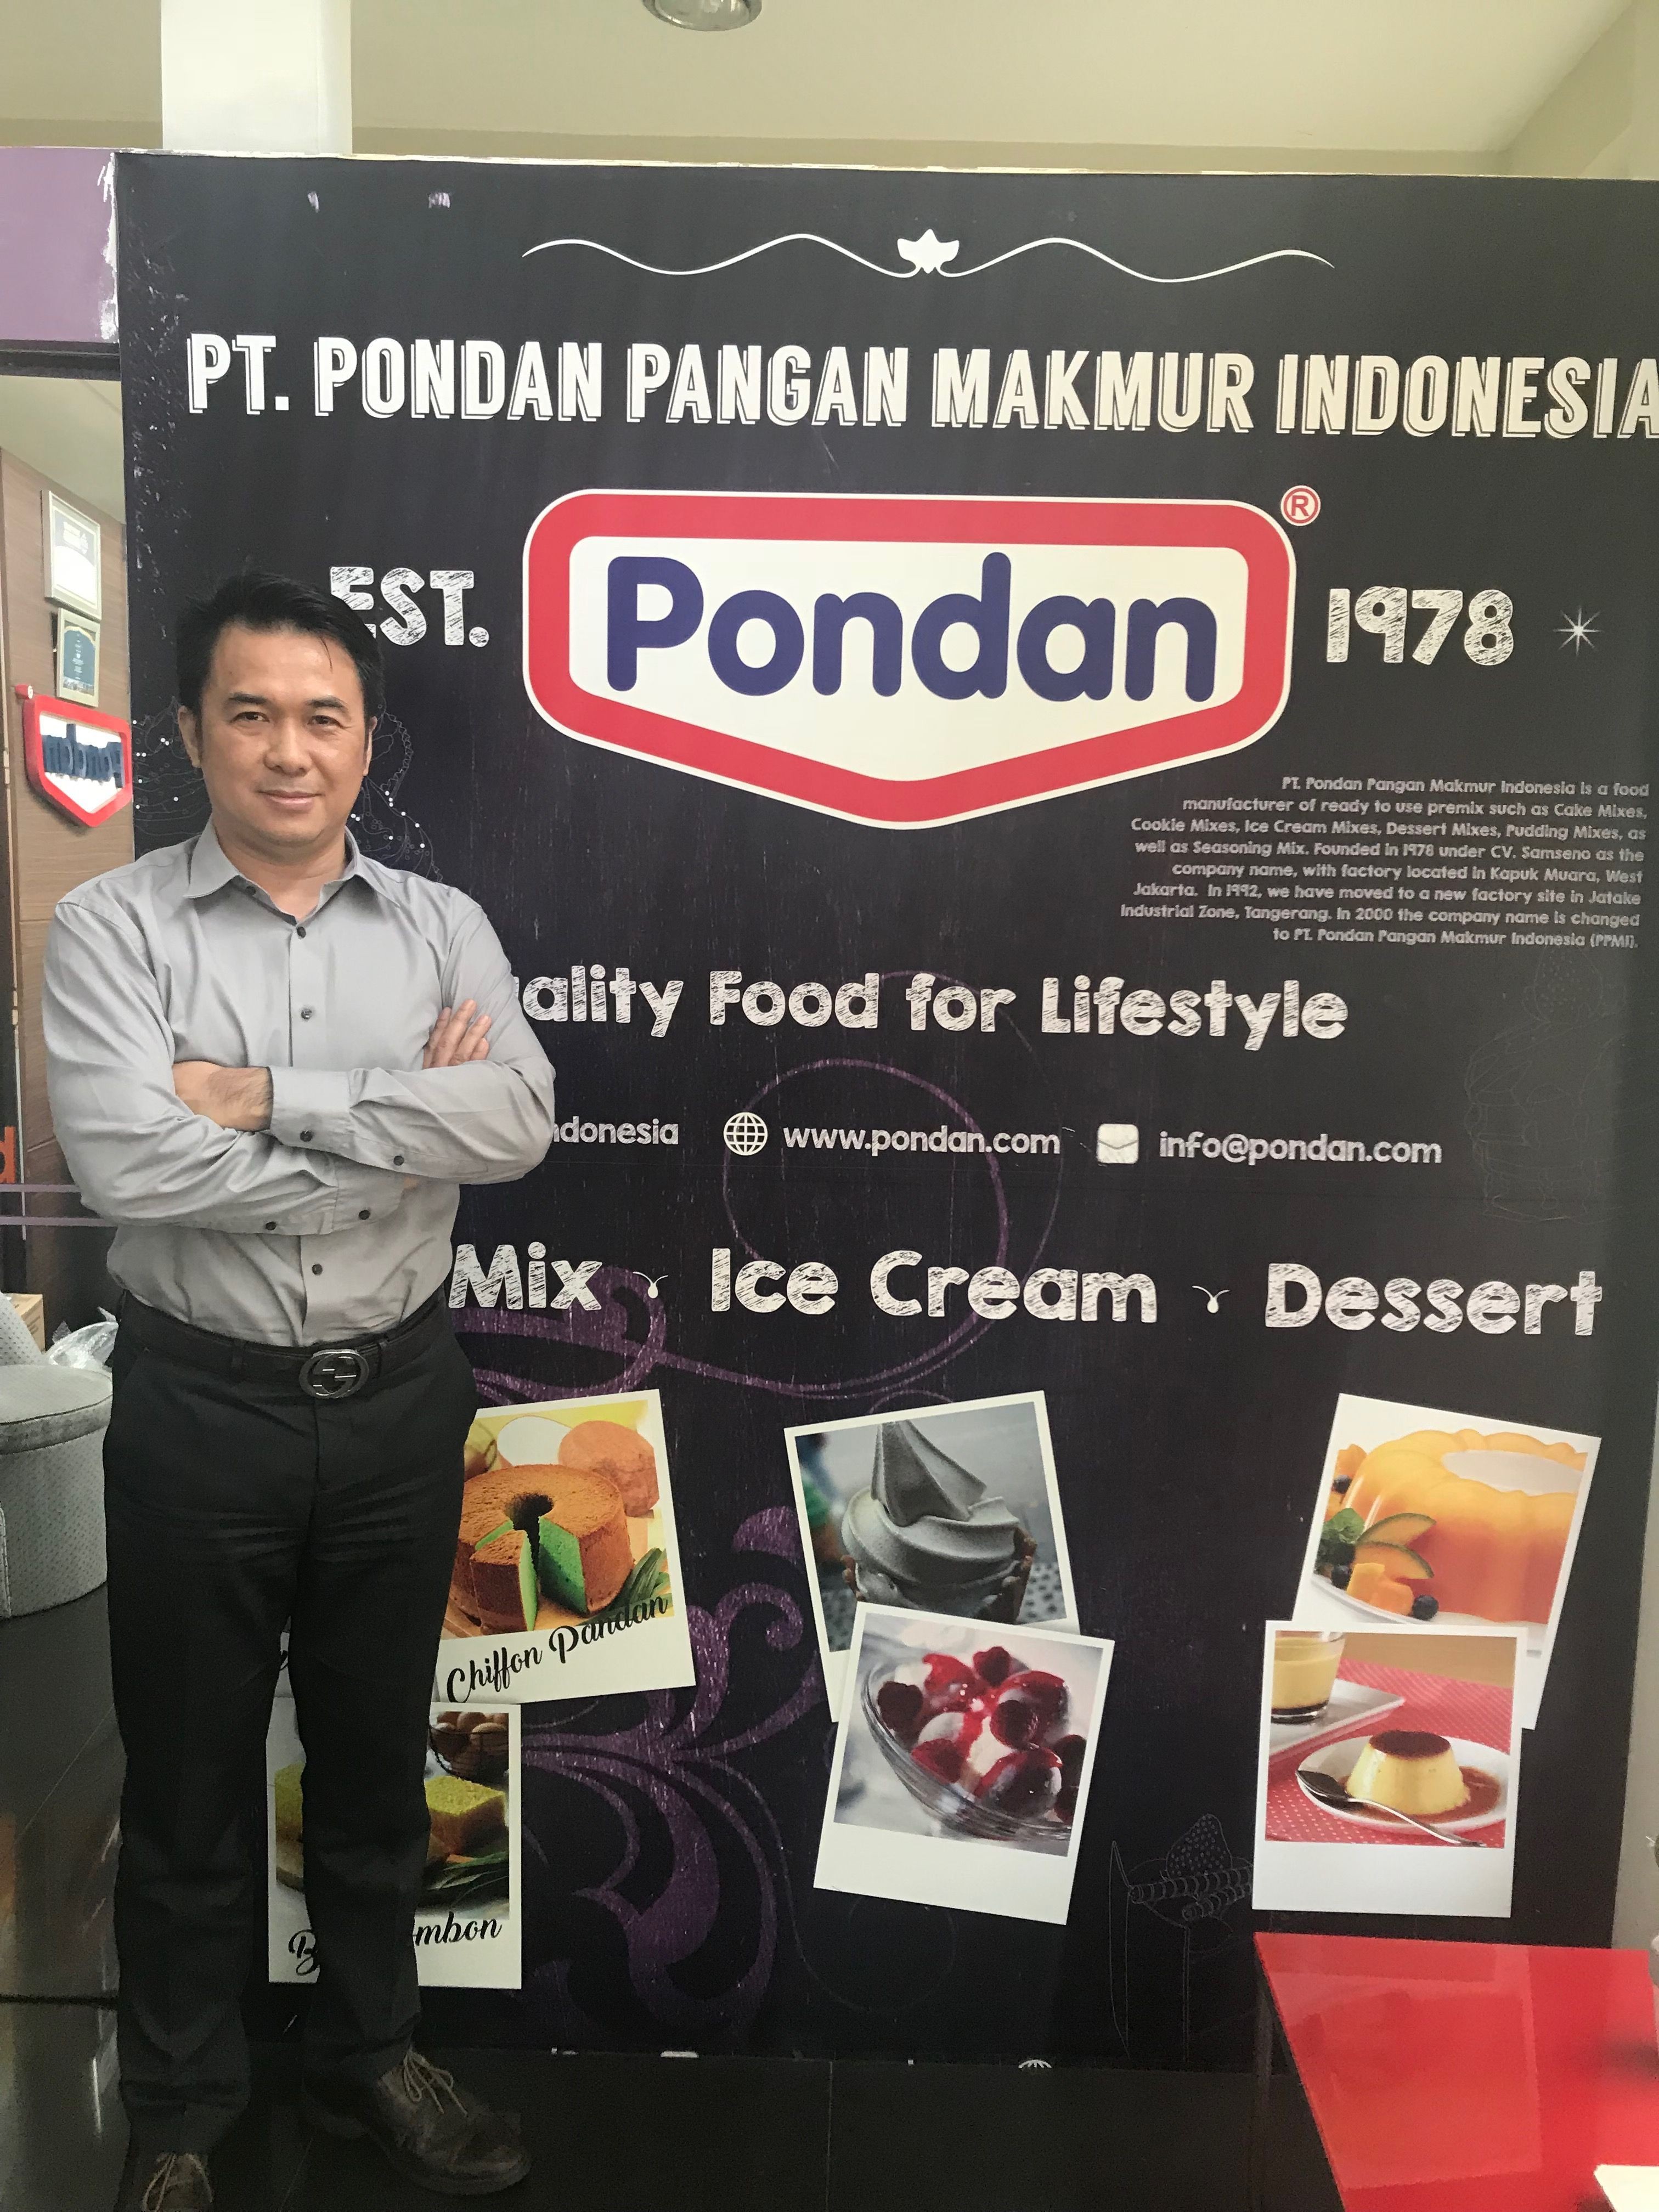 Ricky Widjaja, director of Pondan Pangan Makmur Indonesia